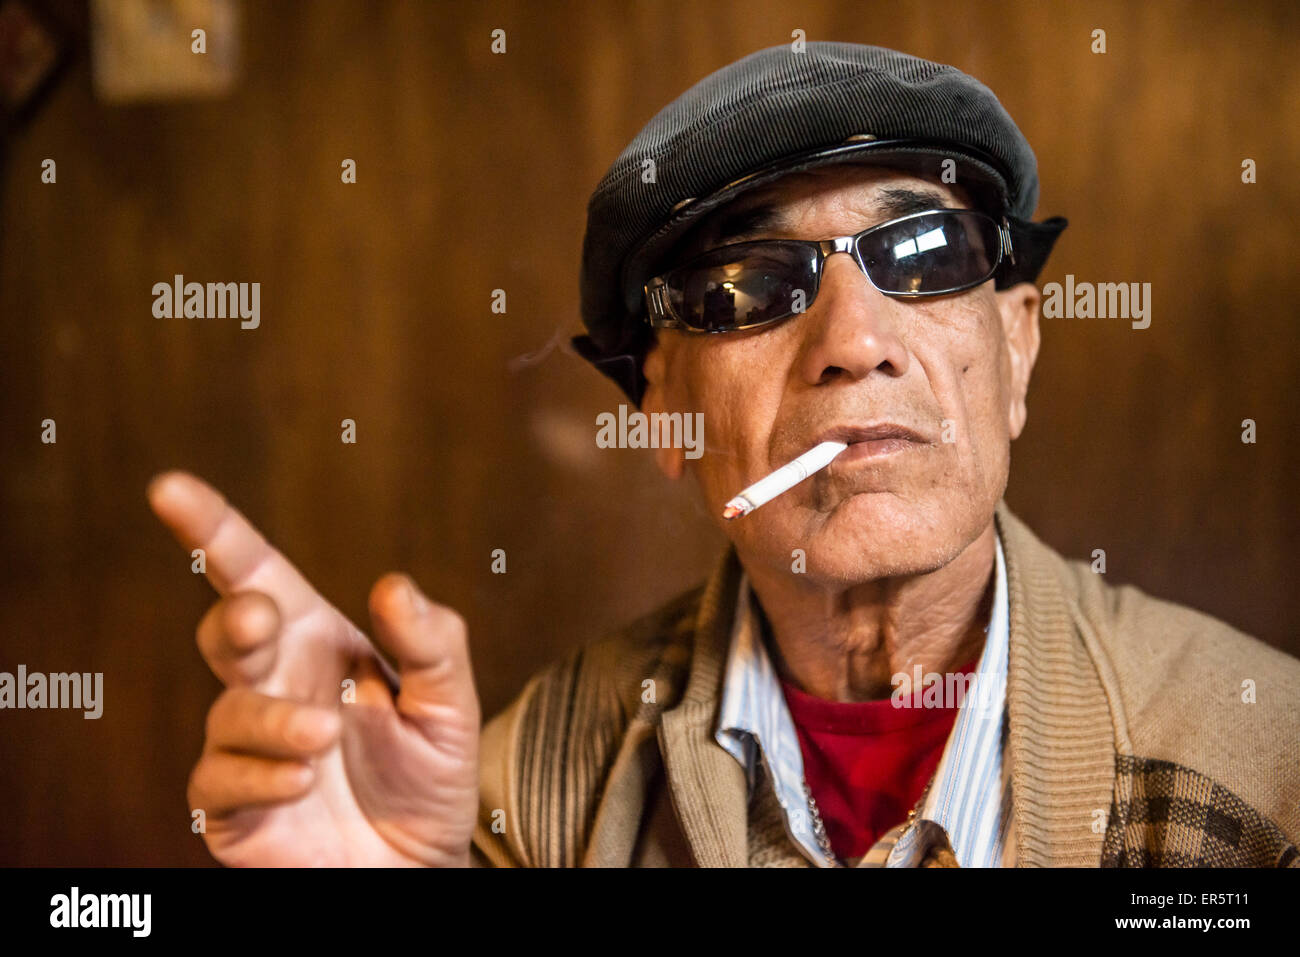 Man wearing sunglasses and smoking a cigarette, Amman, Jordan, Middle East Stock Photo